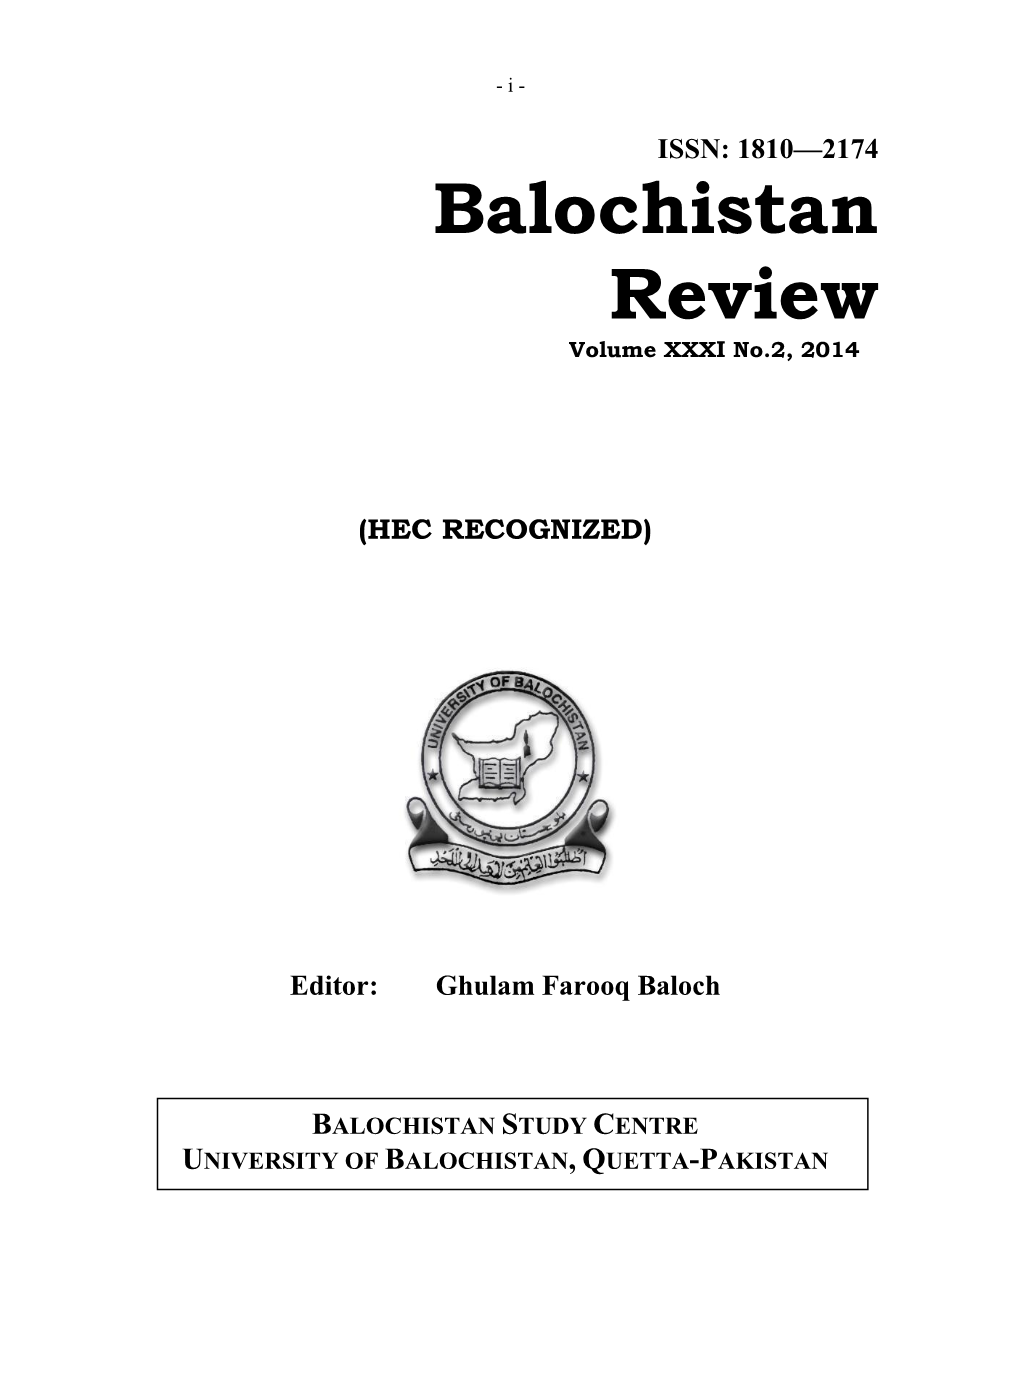 Bi-Annual Research Journal “BALOCHISTAN REVIEW—ISSN